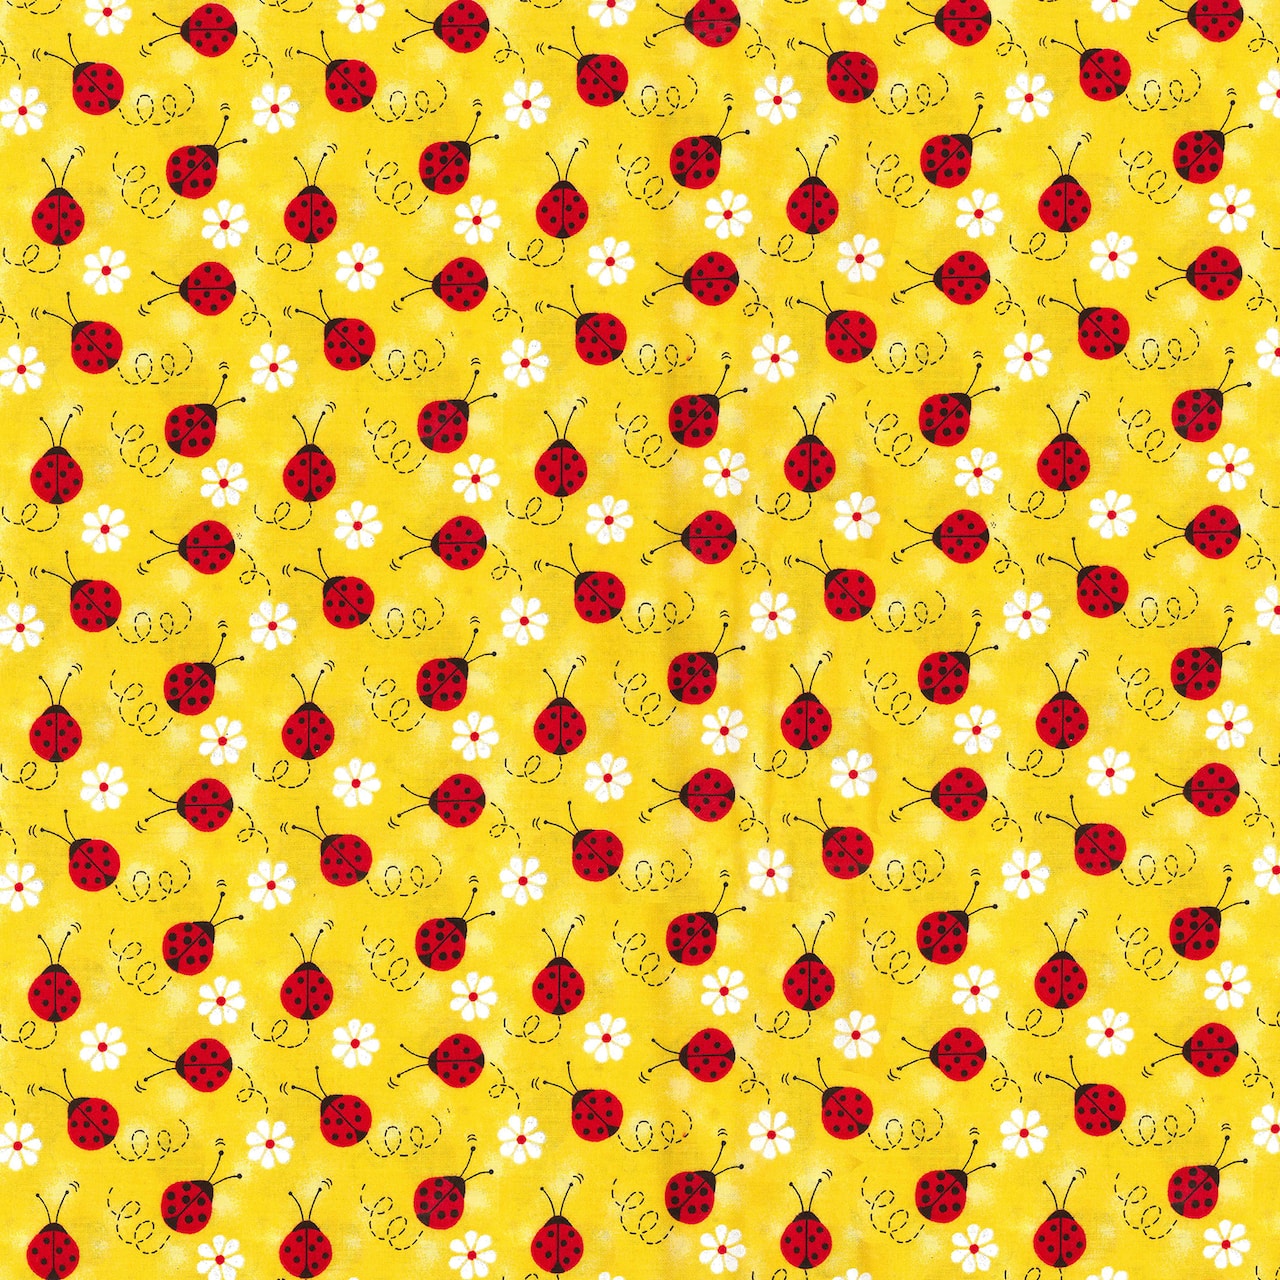 Fabric Traditions Ladybug &#x26; Daisy Novelty Cotton Fabric